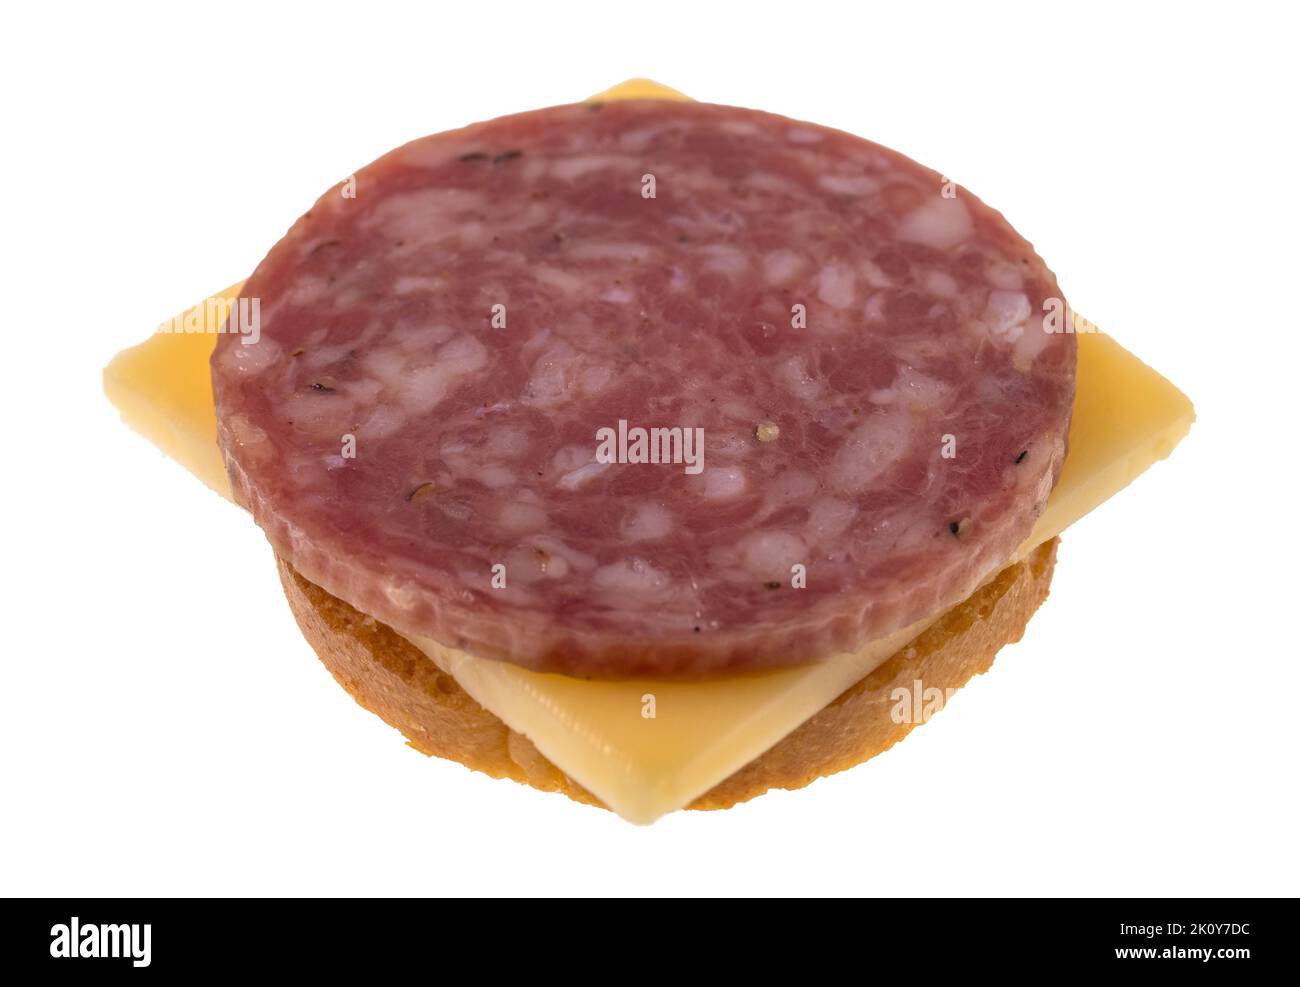 Vista lateral de una rebanada de salami seco con queso gouda sobre un cracker redondo aislado sobre un fondo blanco. Foto de stock